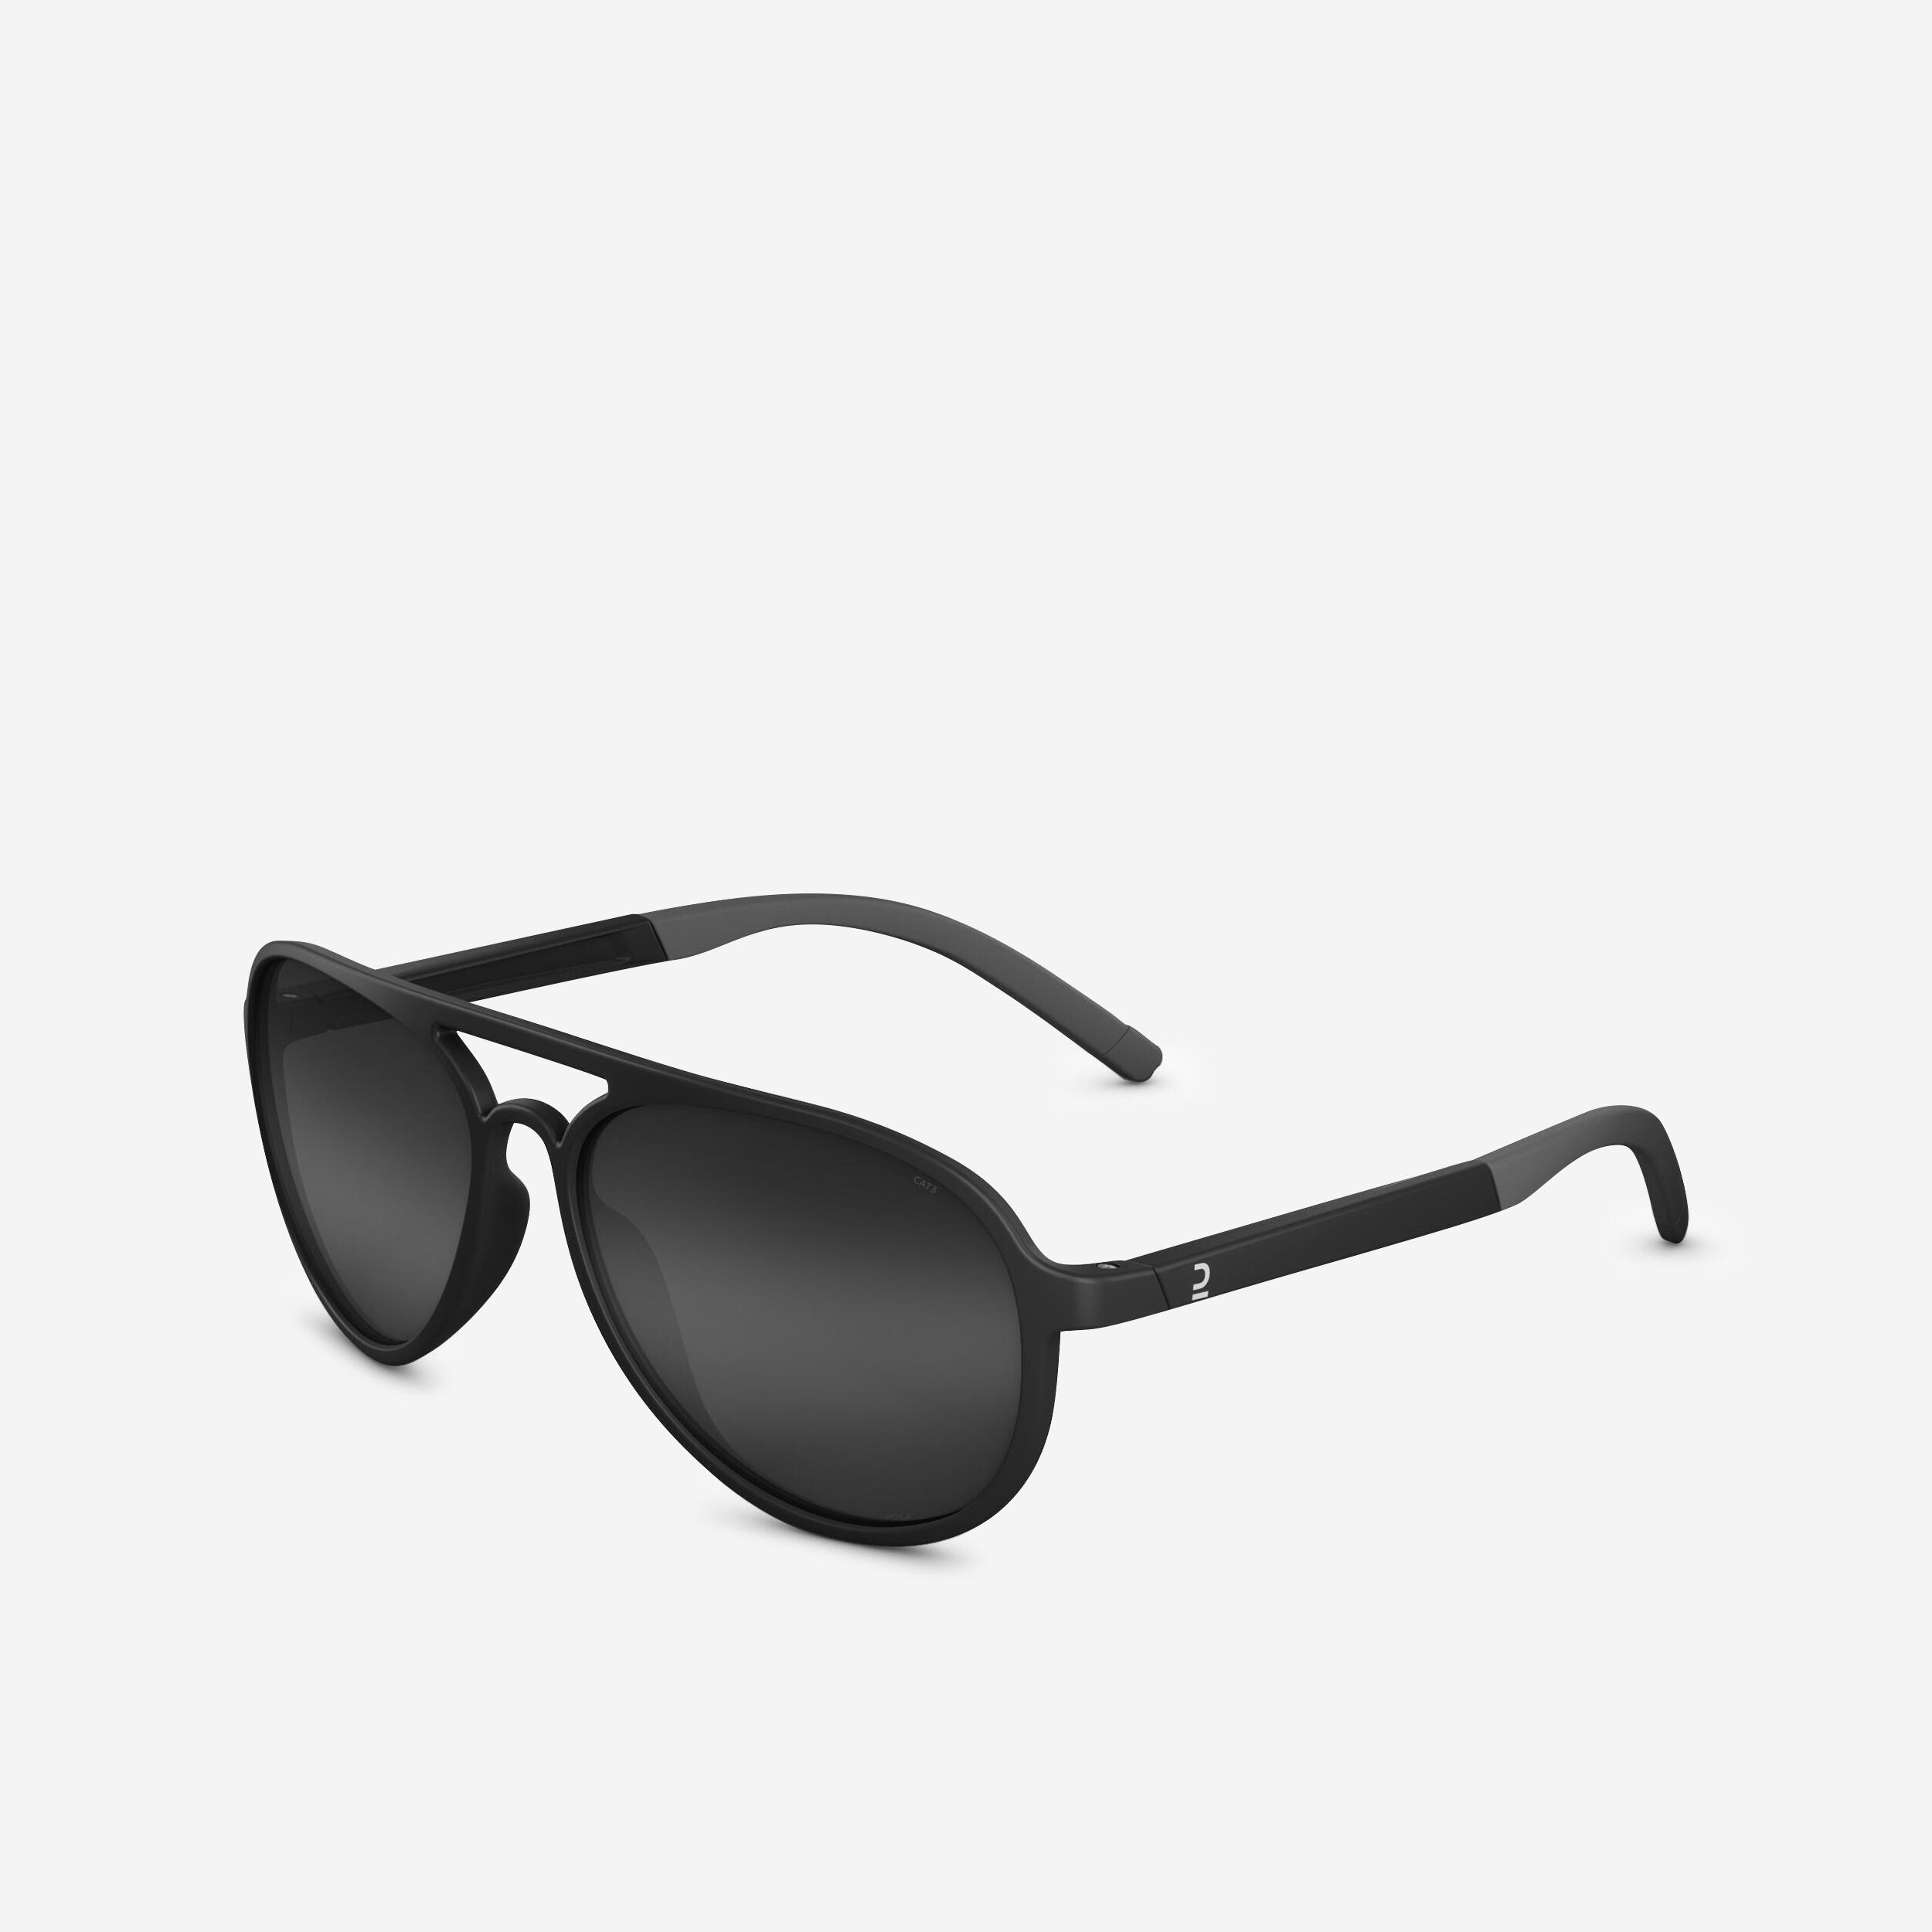 Category 3 Sunglasses - MH 120